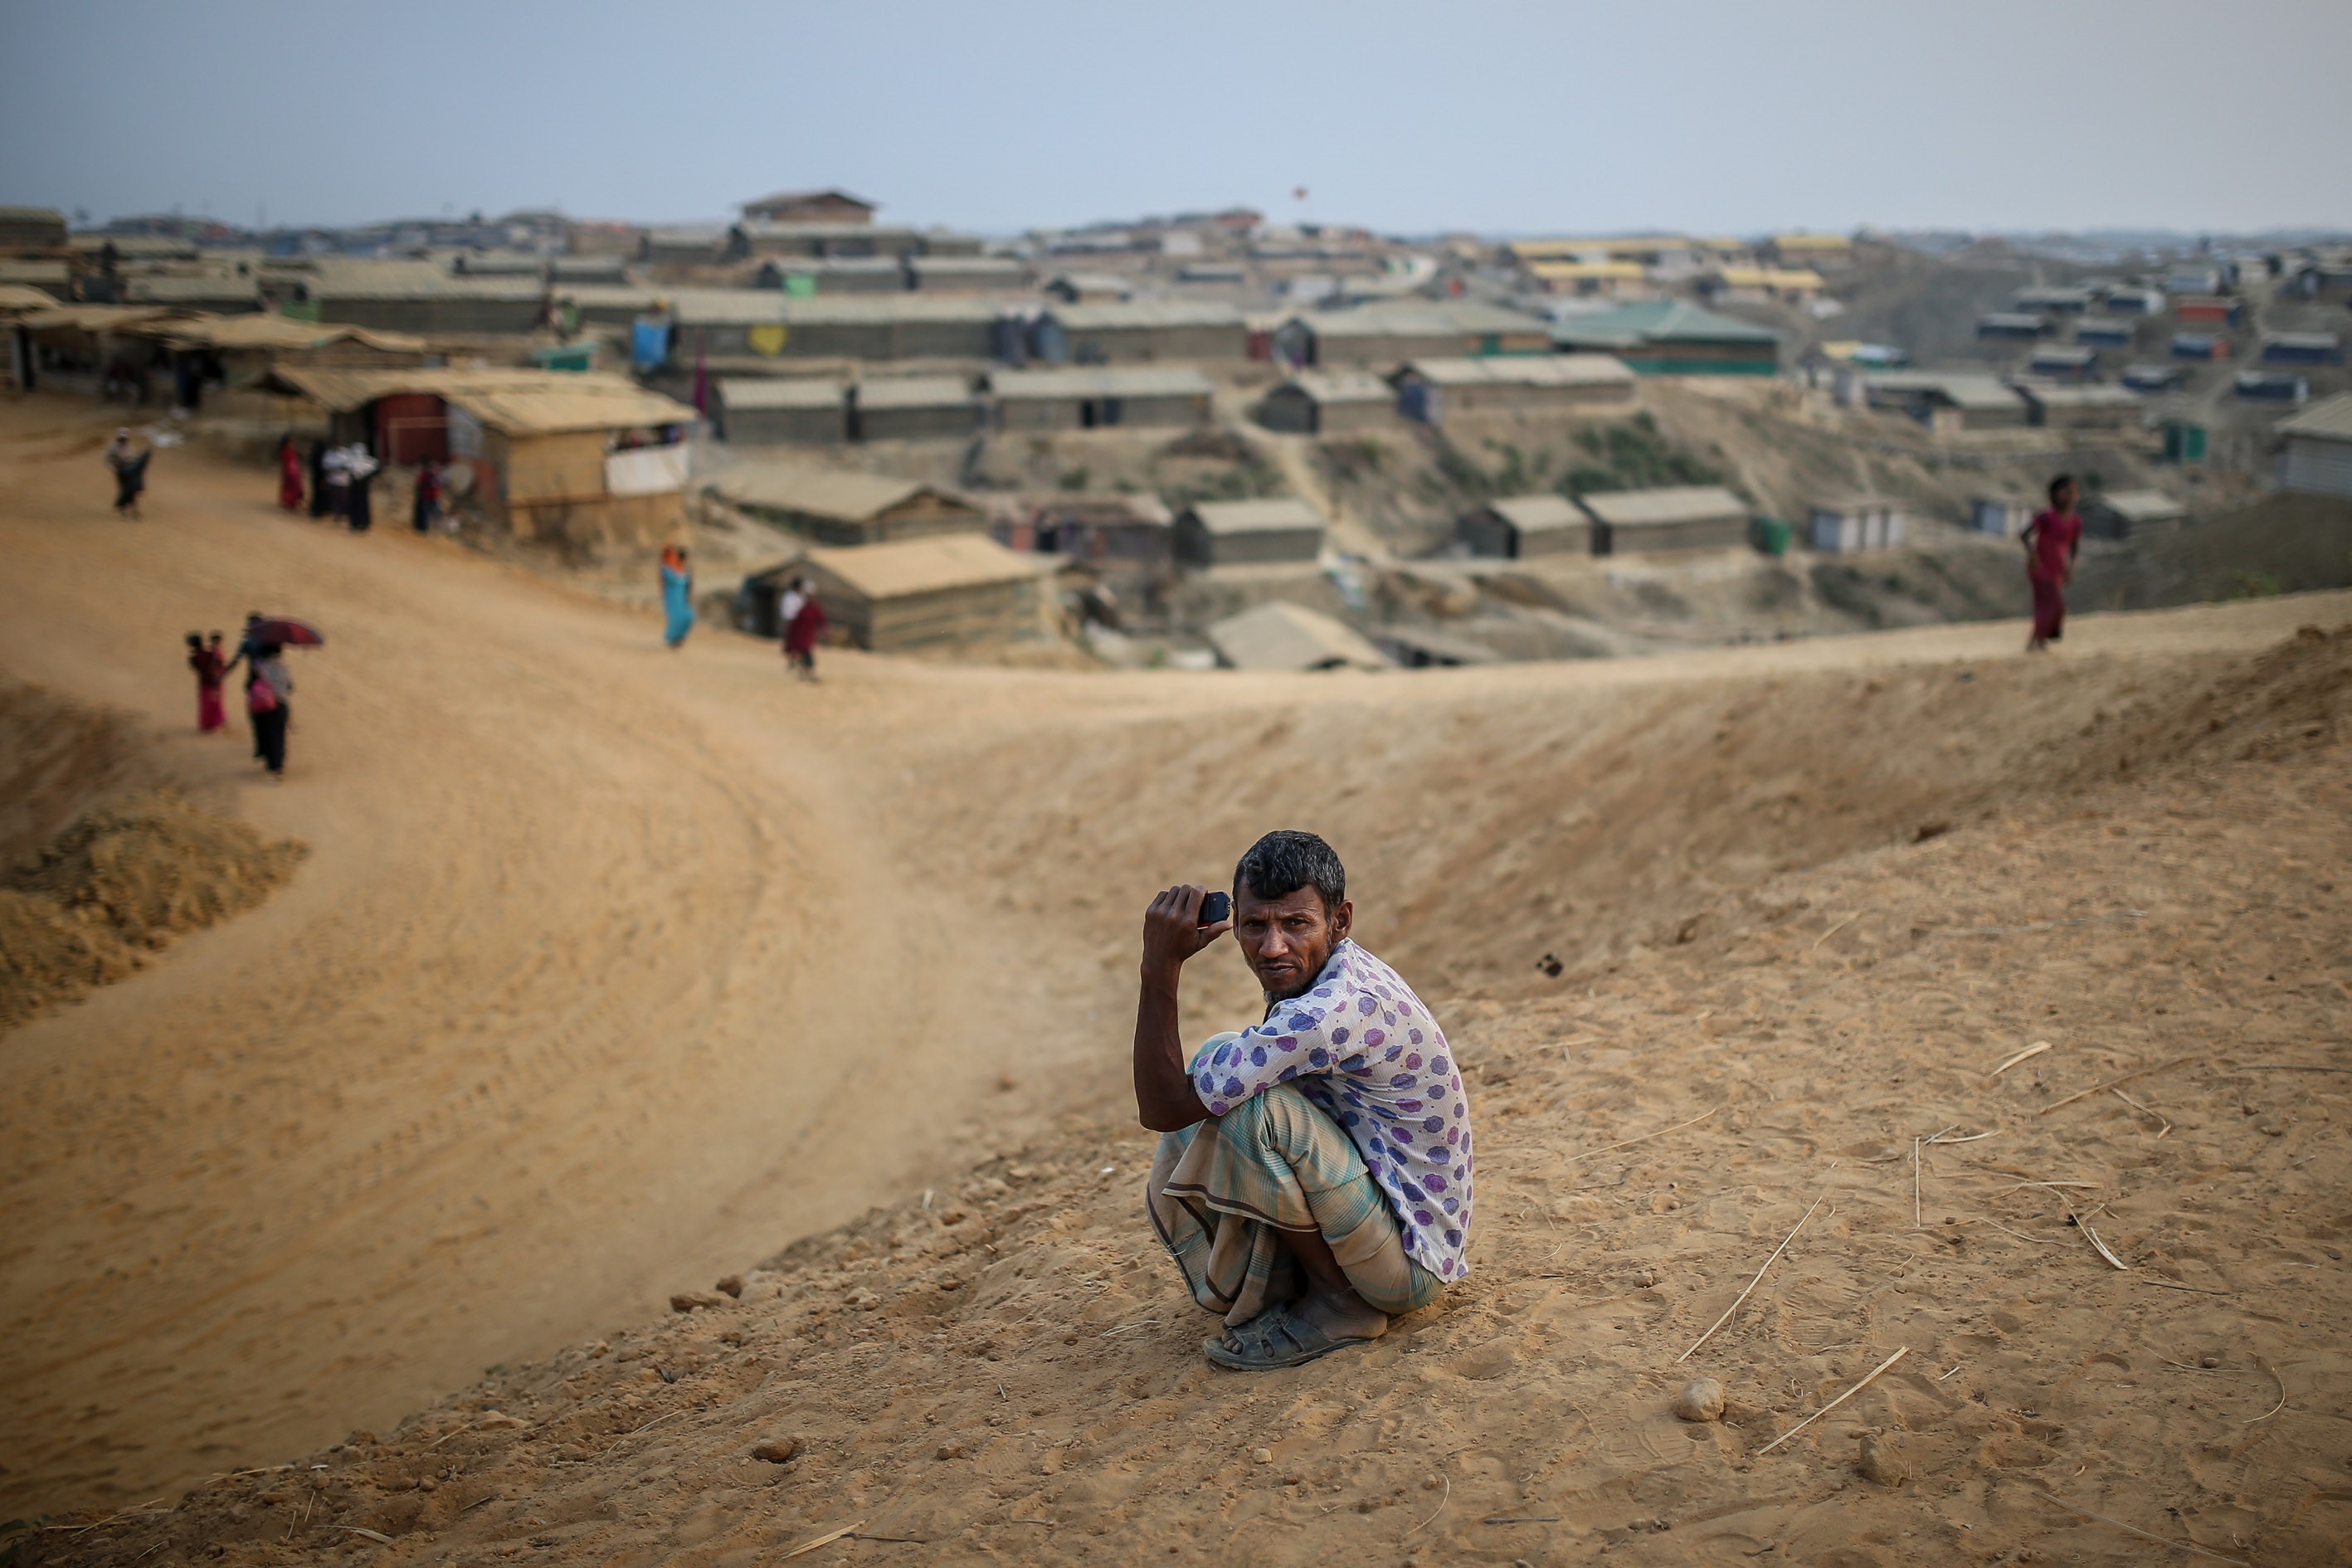 A Rohingya man sits on the ground in the at Kutupalong refugee camp near Cox's Bazar, Bangladesh on April 7, 2018. (Arif Hudaverdi Yaman—Anadolu Agency/Getty Images)